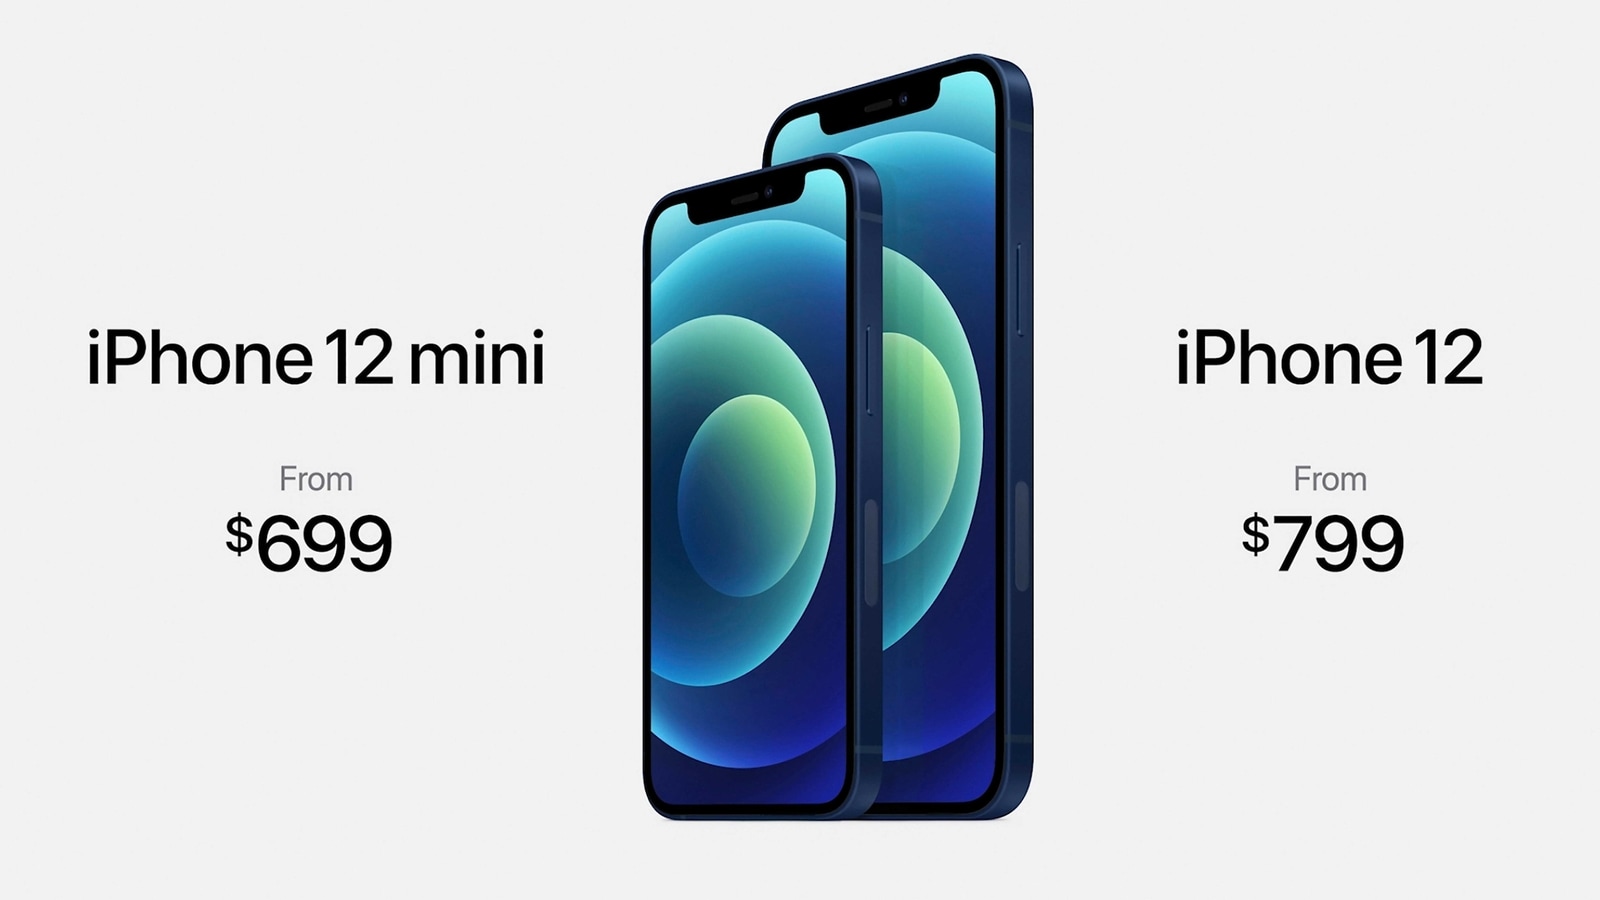 iPhone 12 Pro series have 6GB of RAM, iPhone 12, iPhone 12 Mini just get 4GB